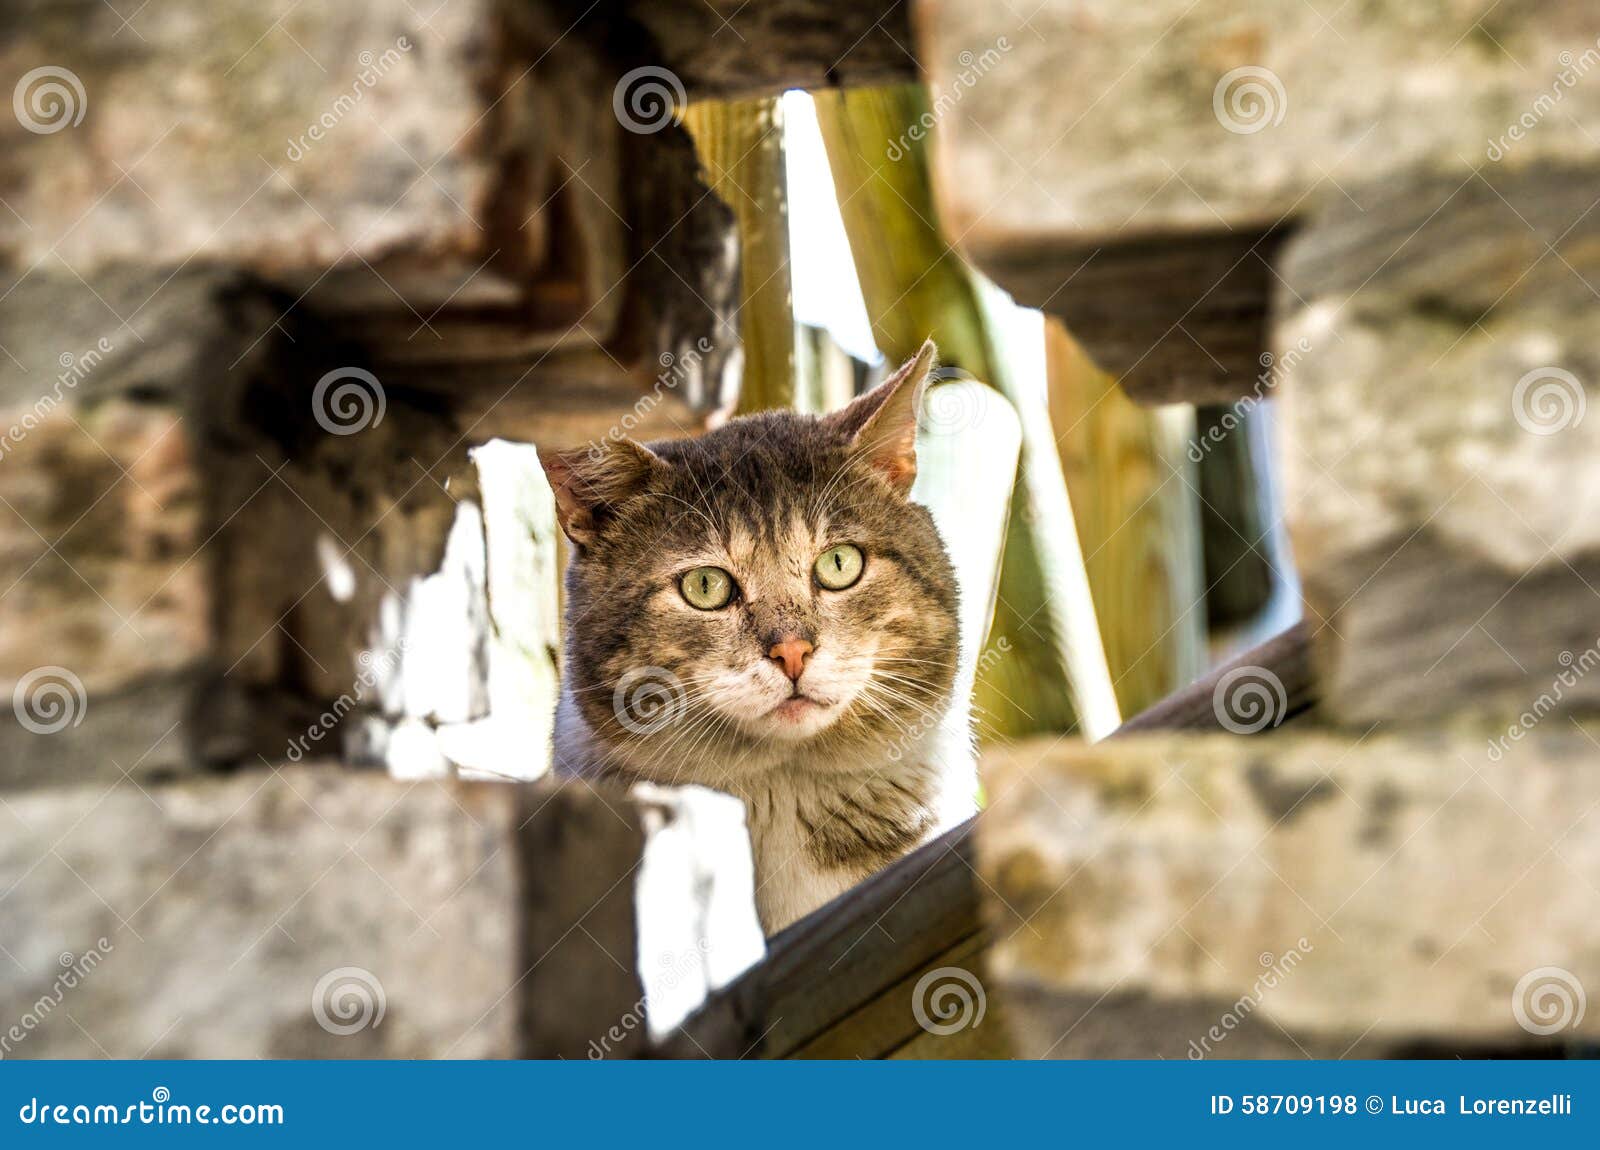 curious cat peeking through hole rock wall